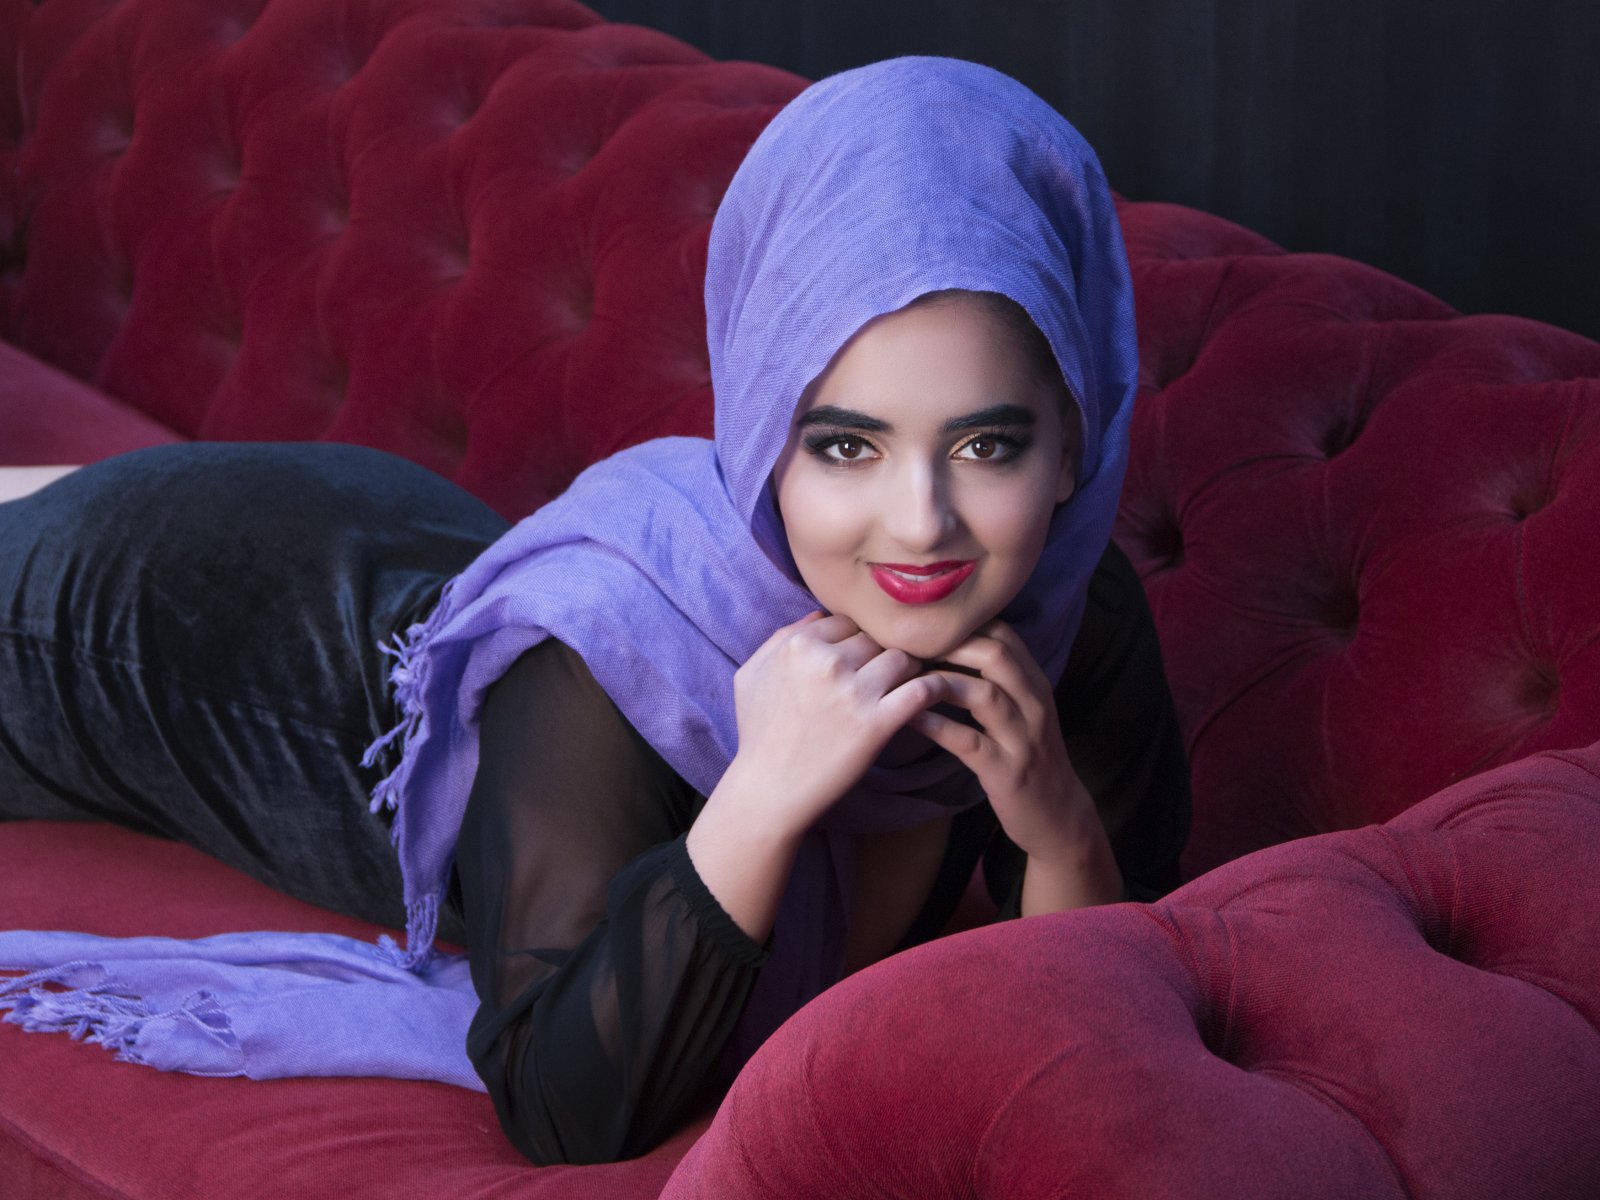 Asian Virgin Girls First Sex - arab virgin sex | Arab porn videos with arab sexy girls